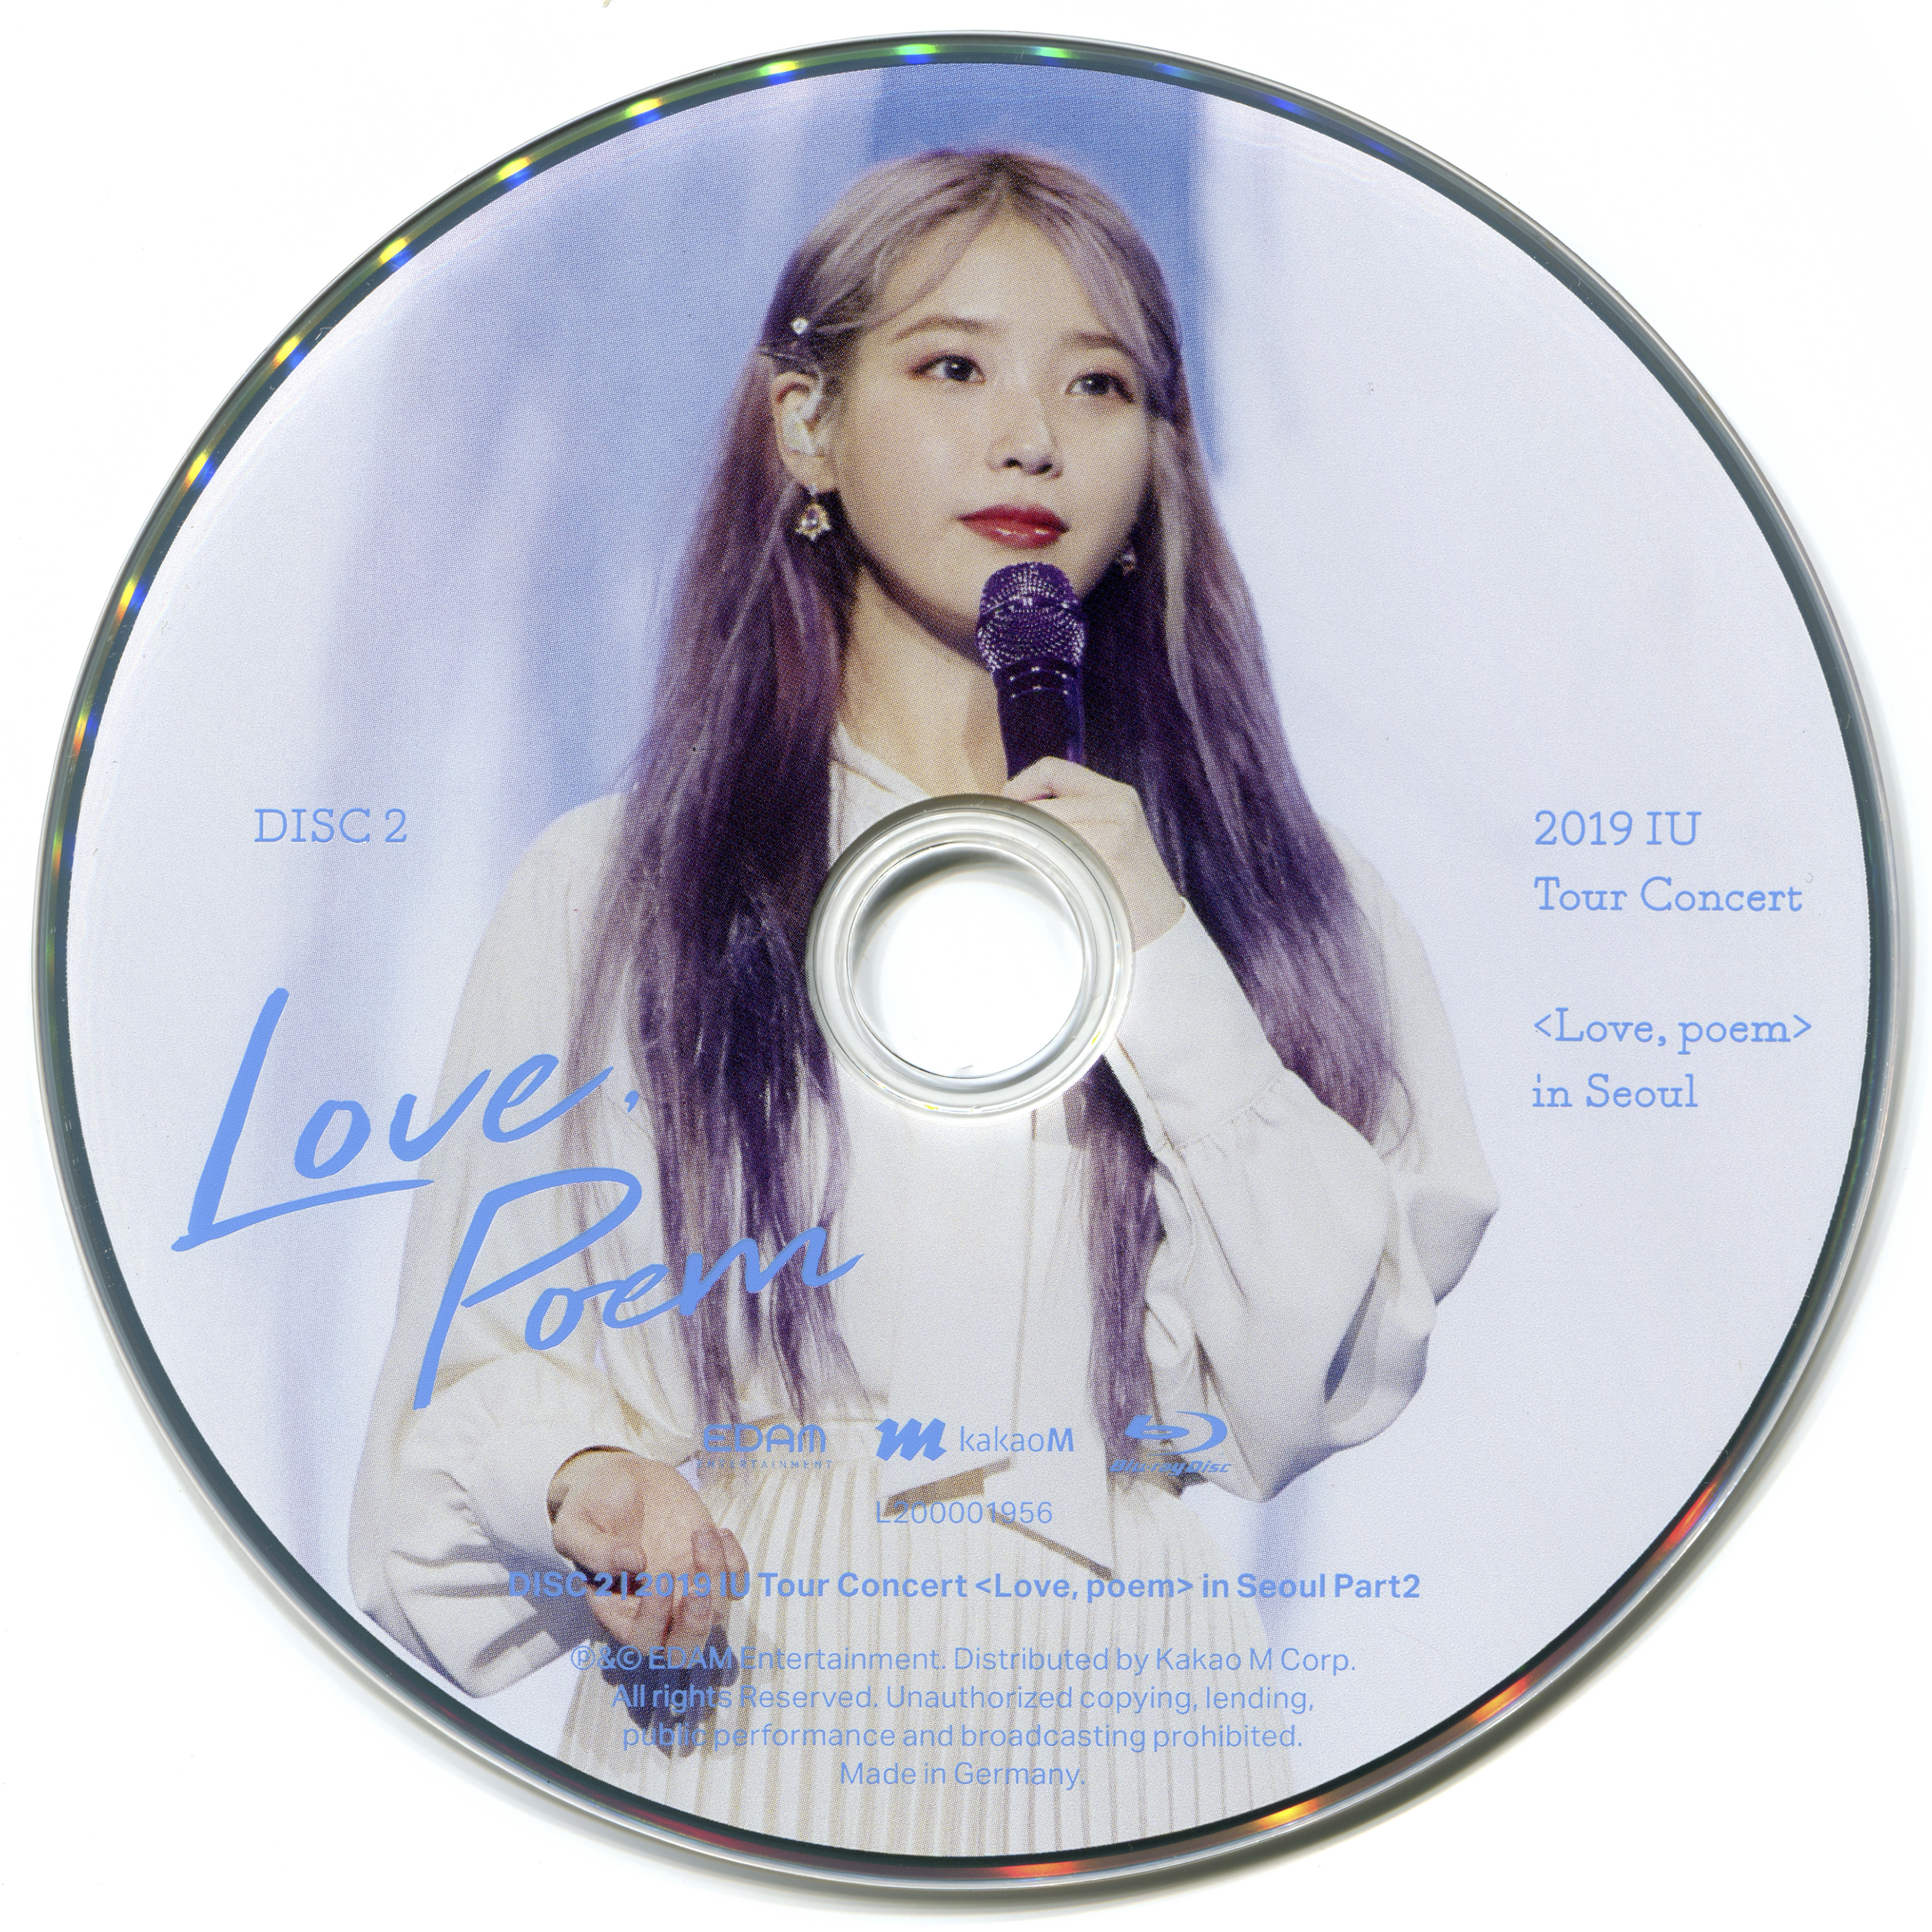 2019 IU Tour Concert <Love, poem> in Seoul DVD / Blu-ray